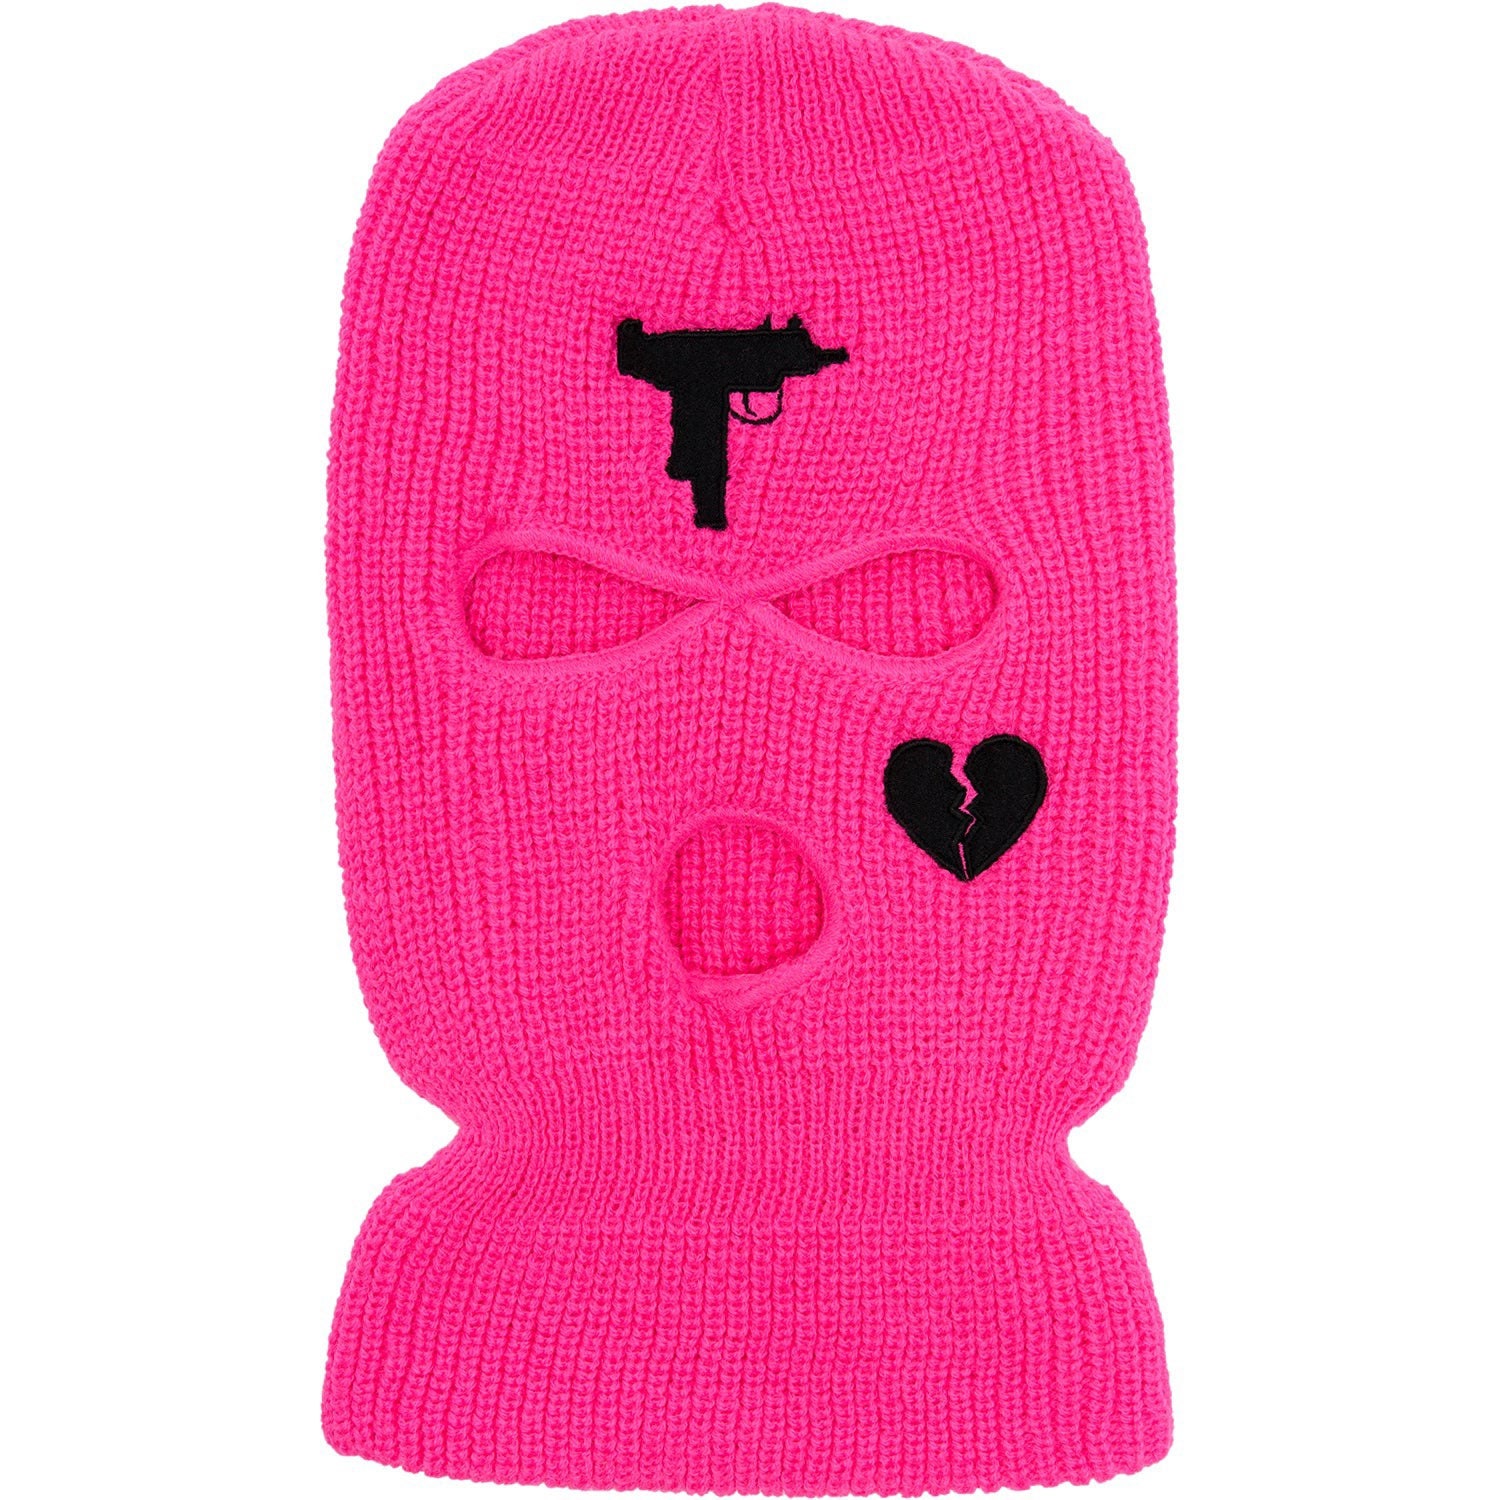 Ski Mask Pink UZI Pistol Broken Heart Embroidered Pink Cool 